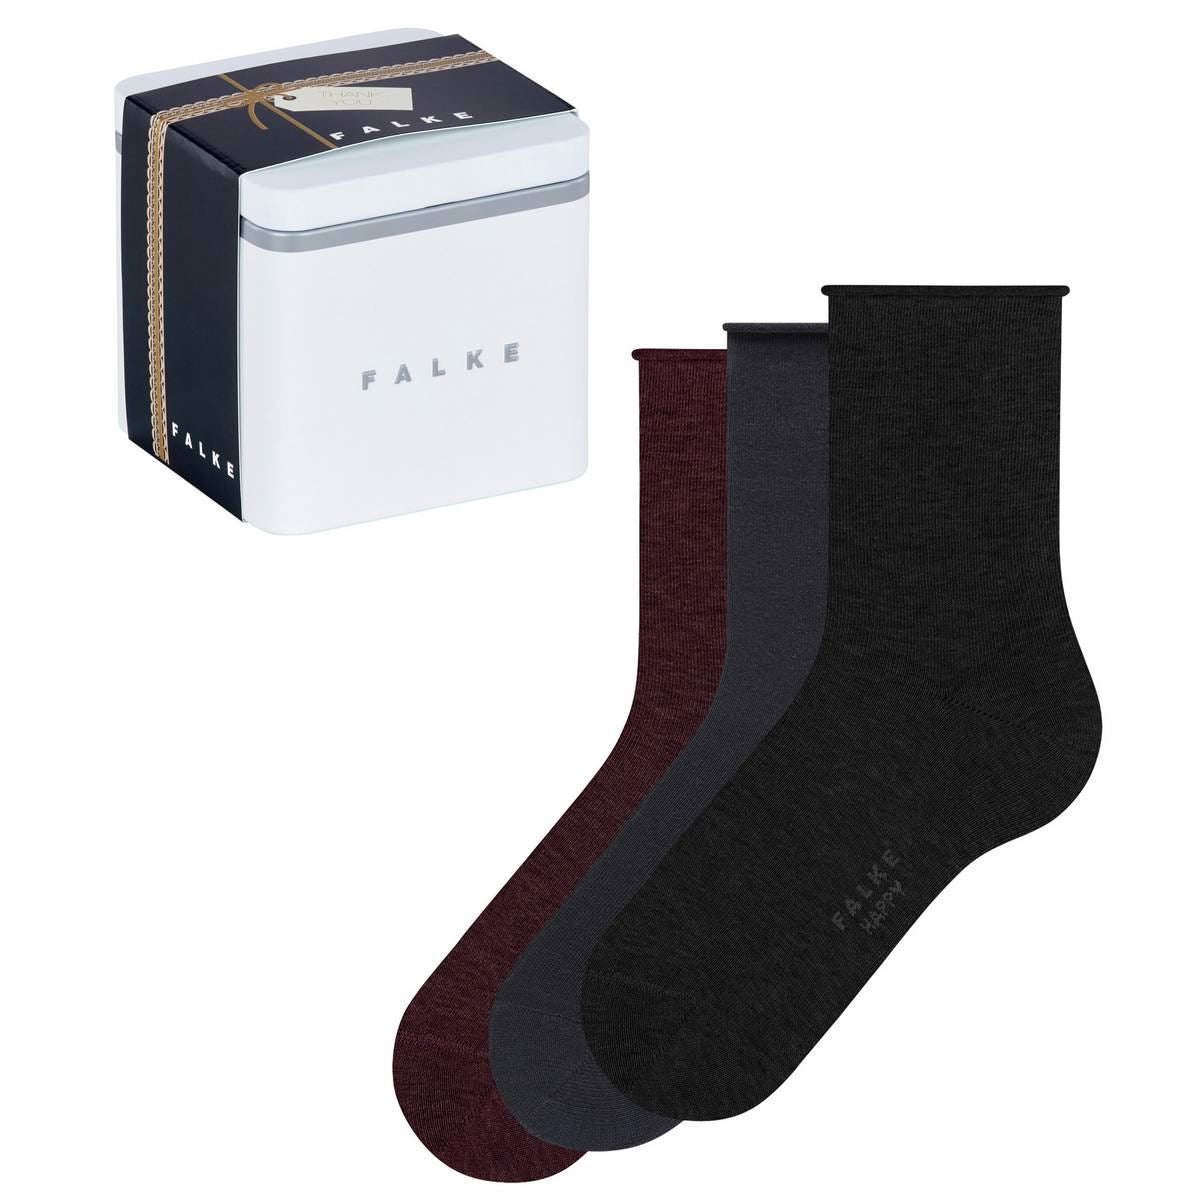 Falke Happy Box Thank You 3 Pack Socks - Black/Grey/Burgundy